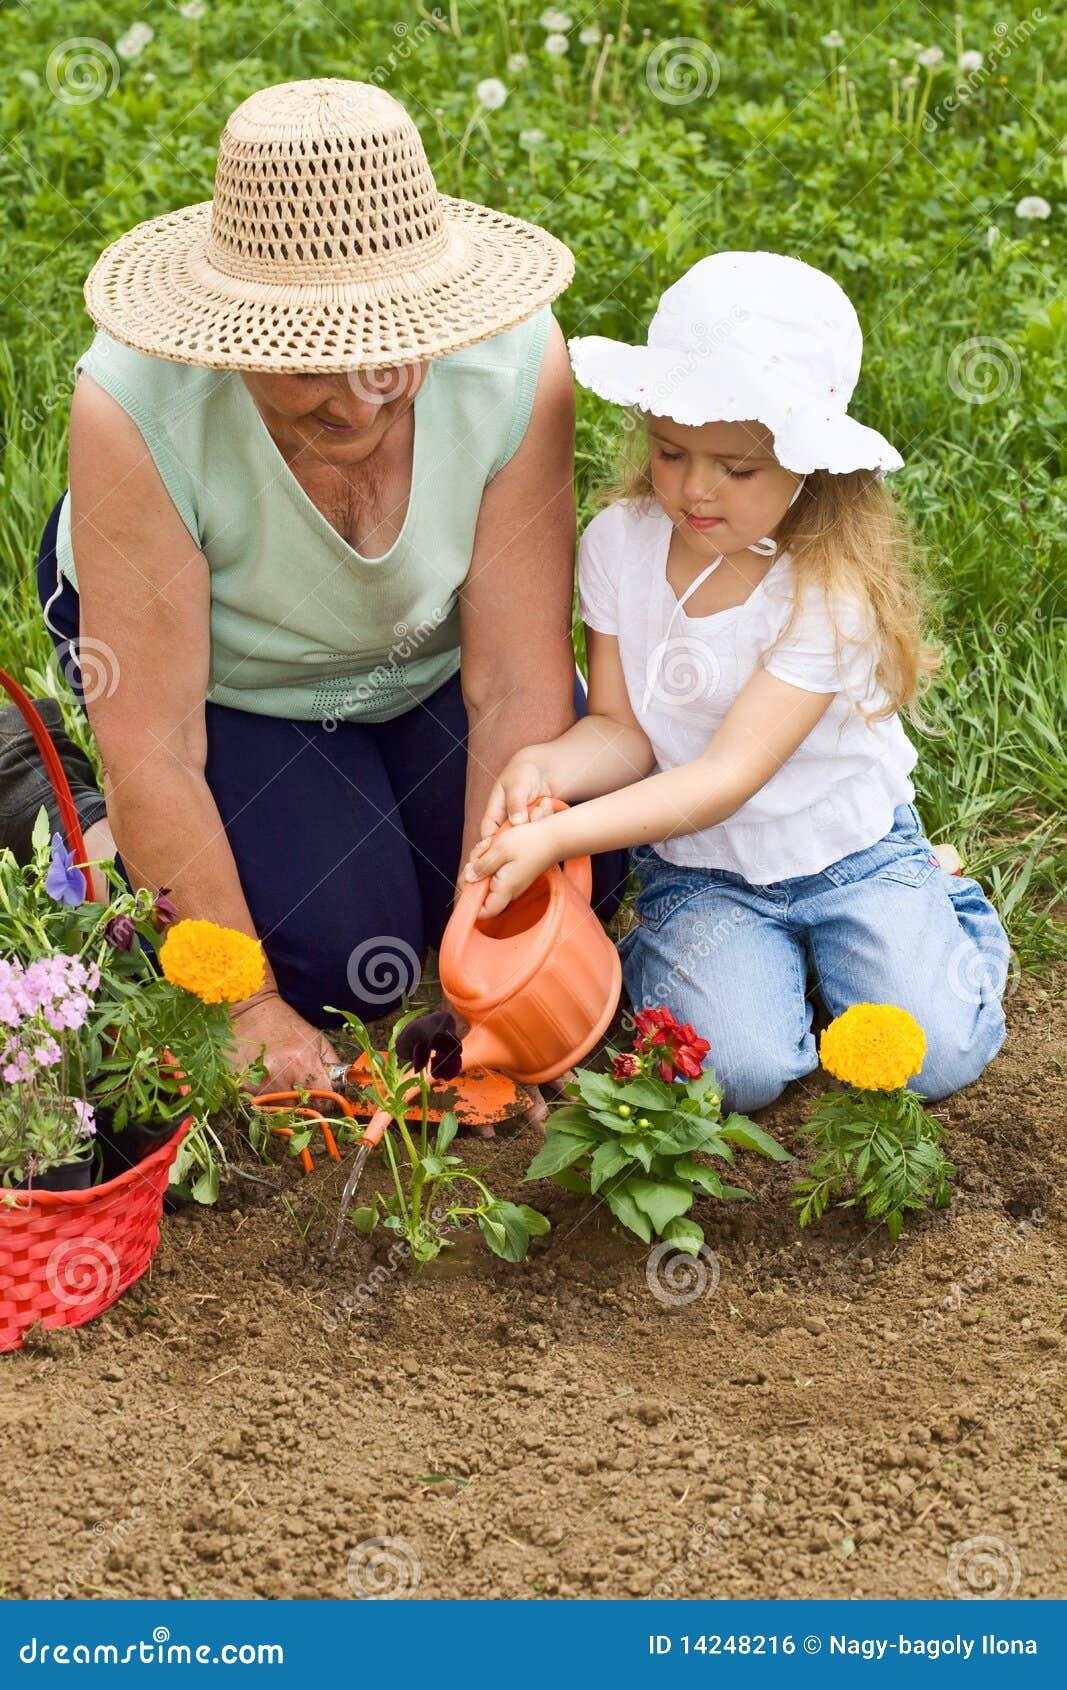 grandmother teaching child the basics of gardening